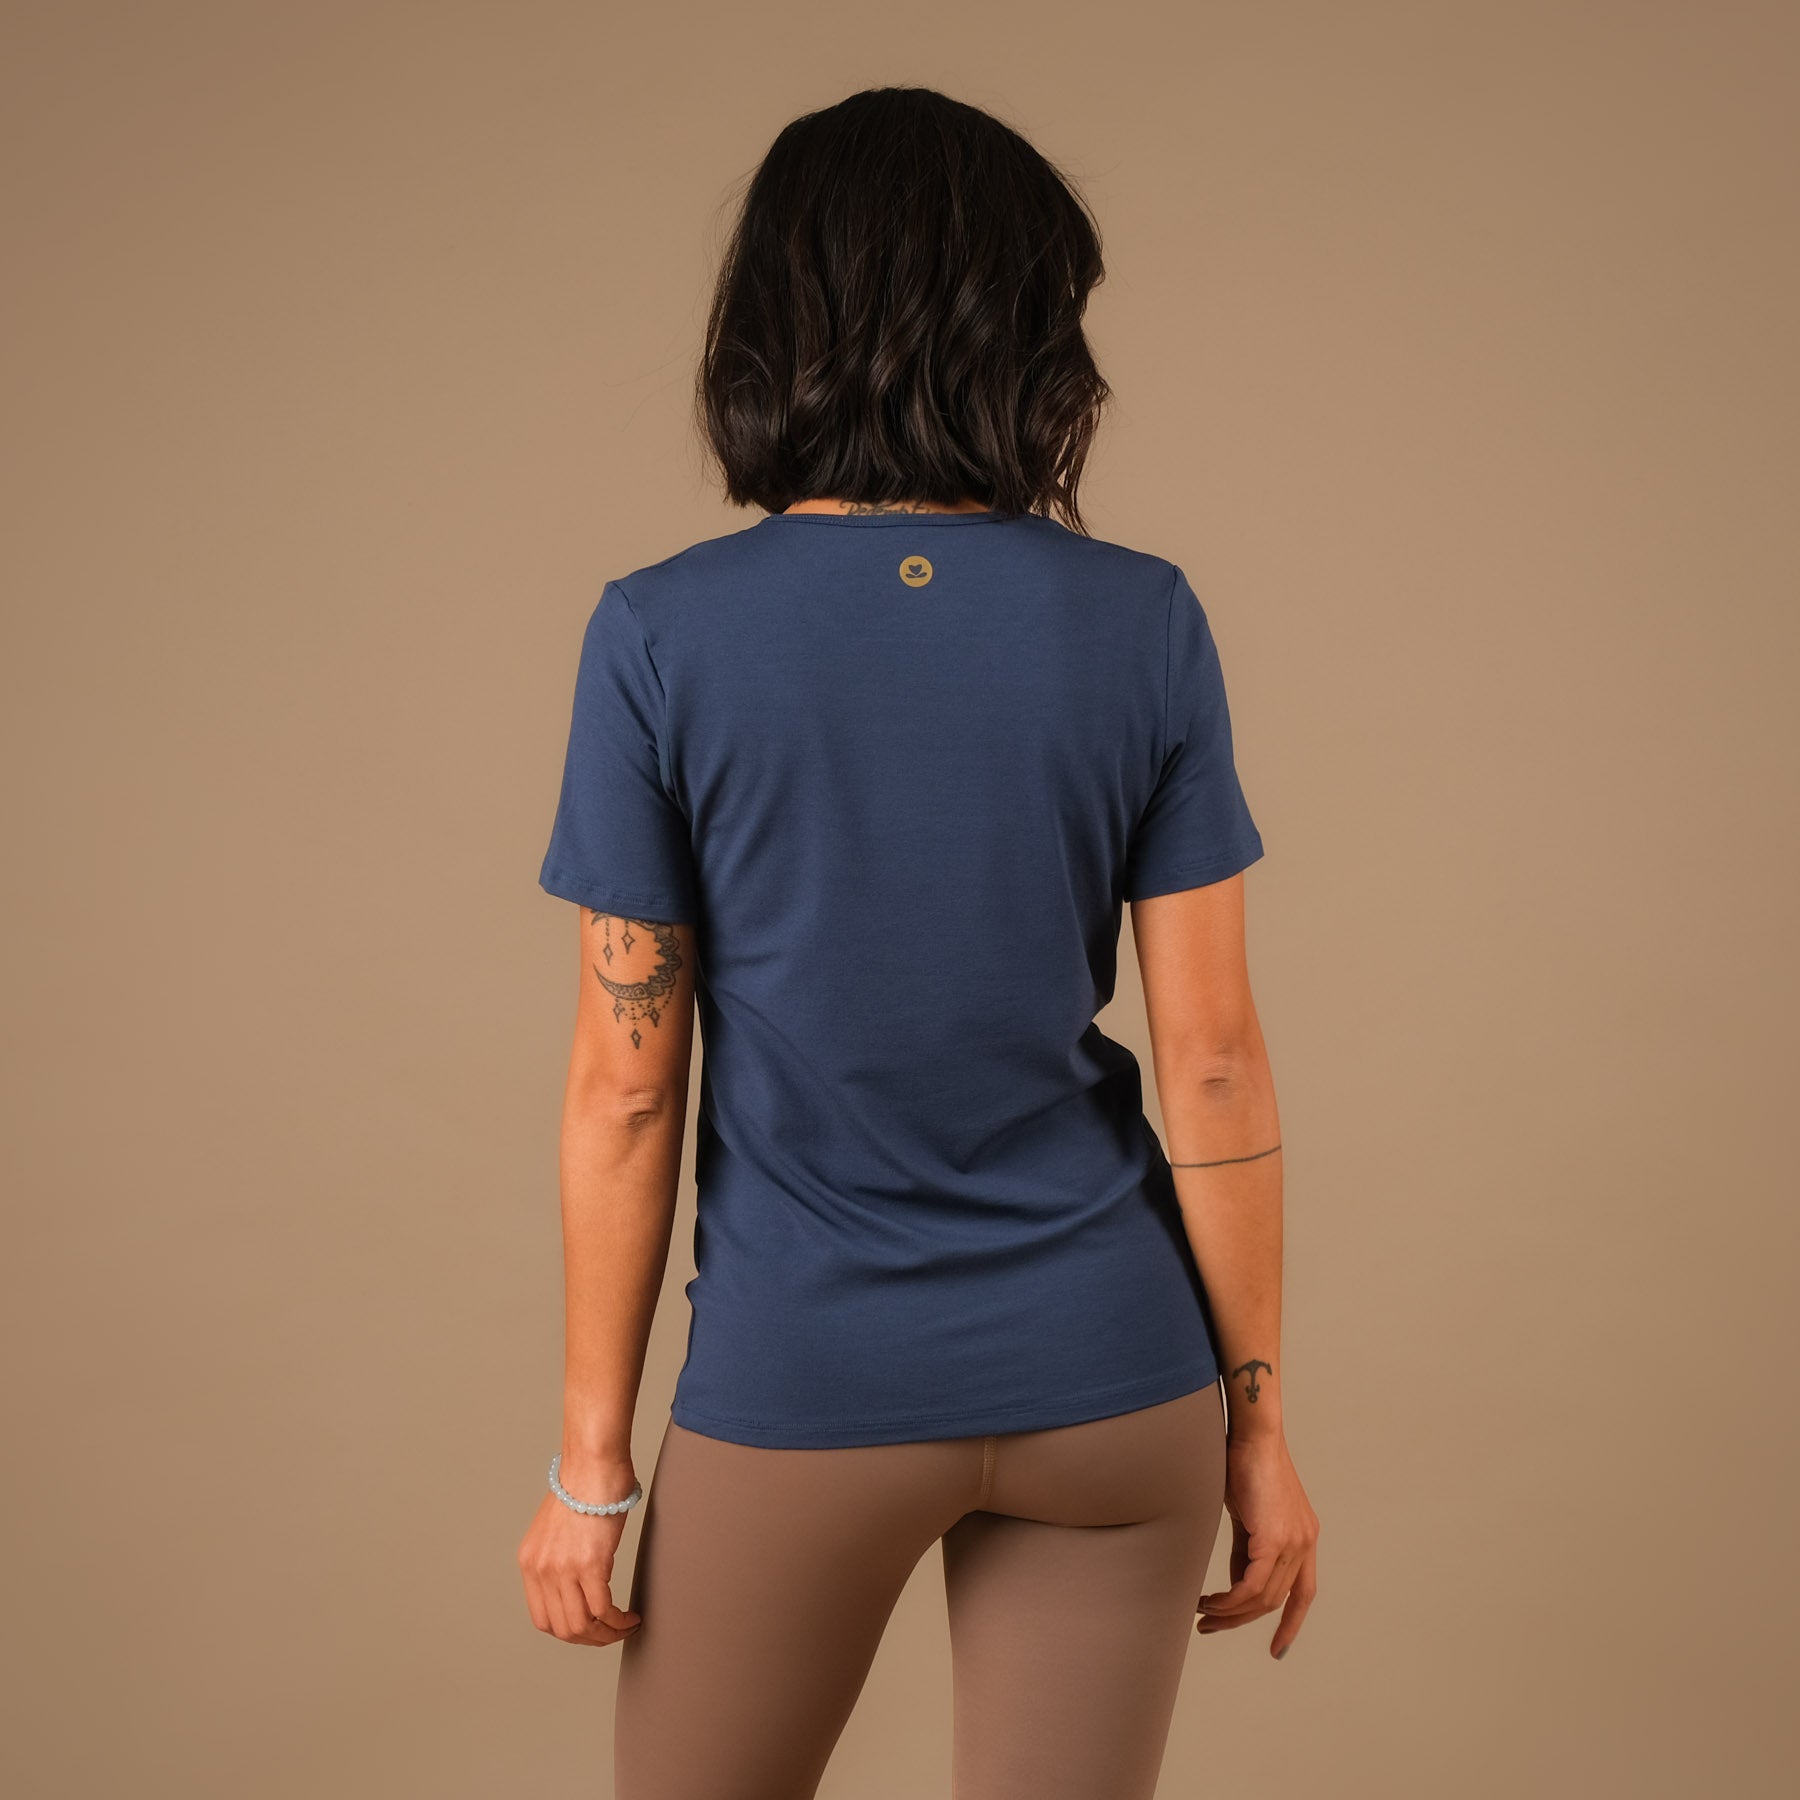 Shirt de yoga Classy manches courtes indigo